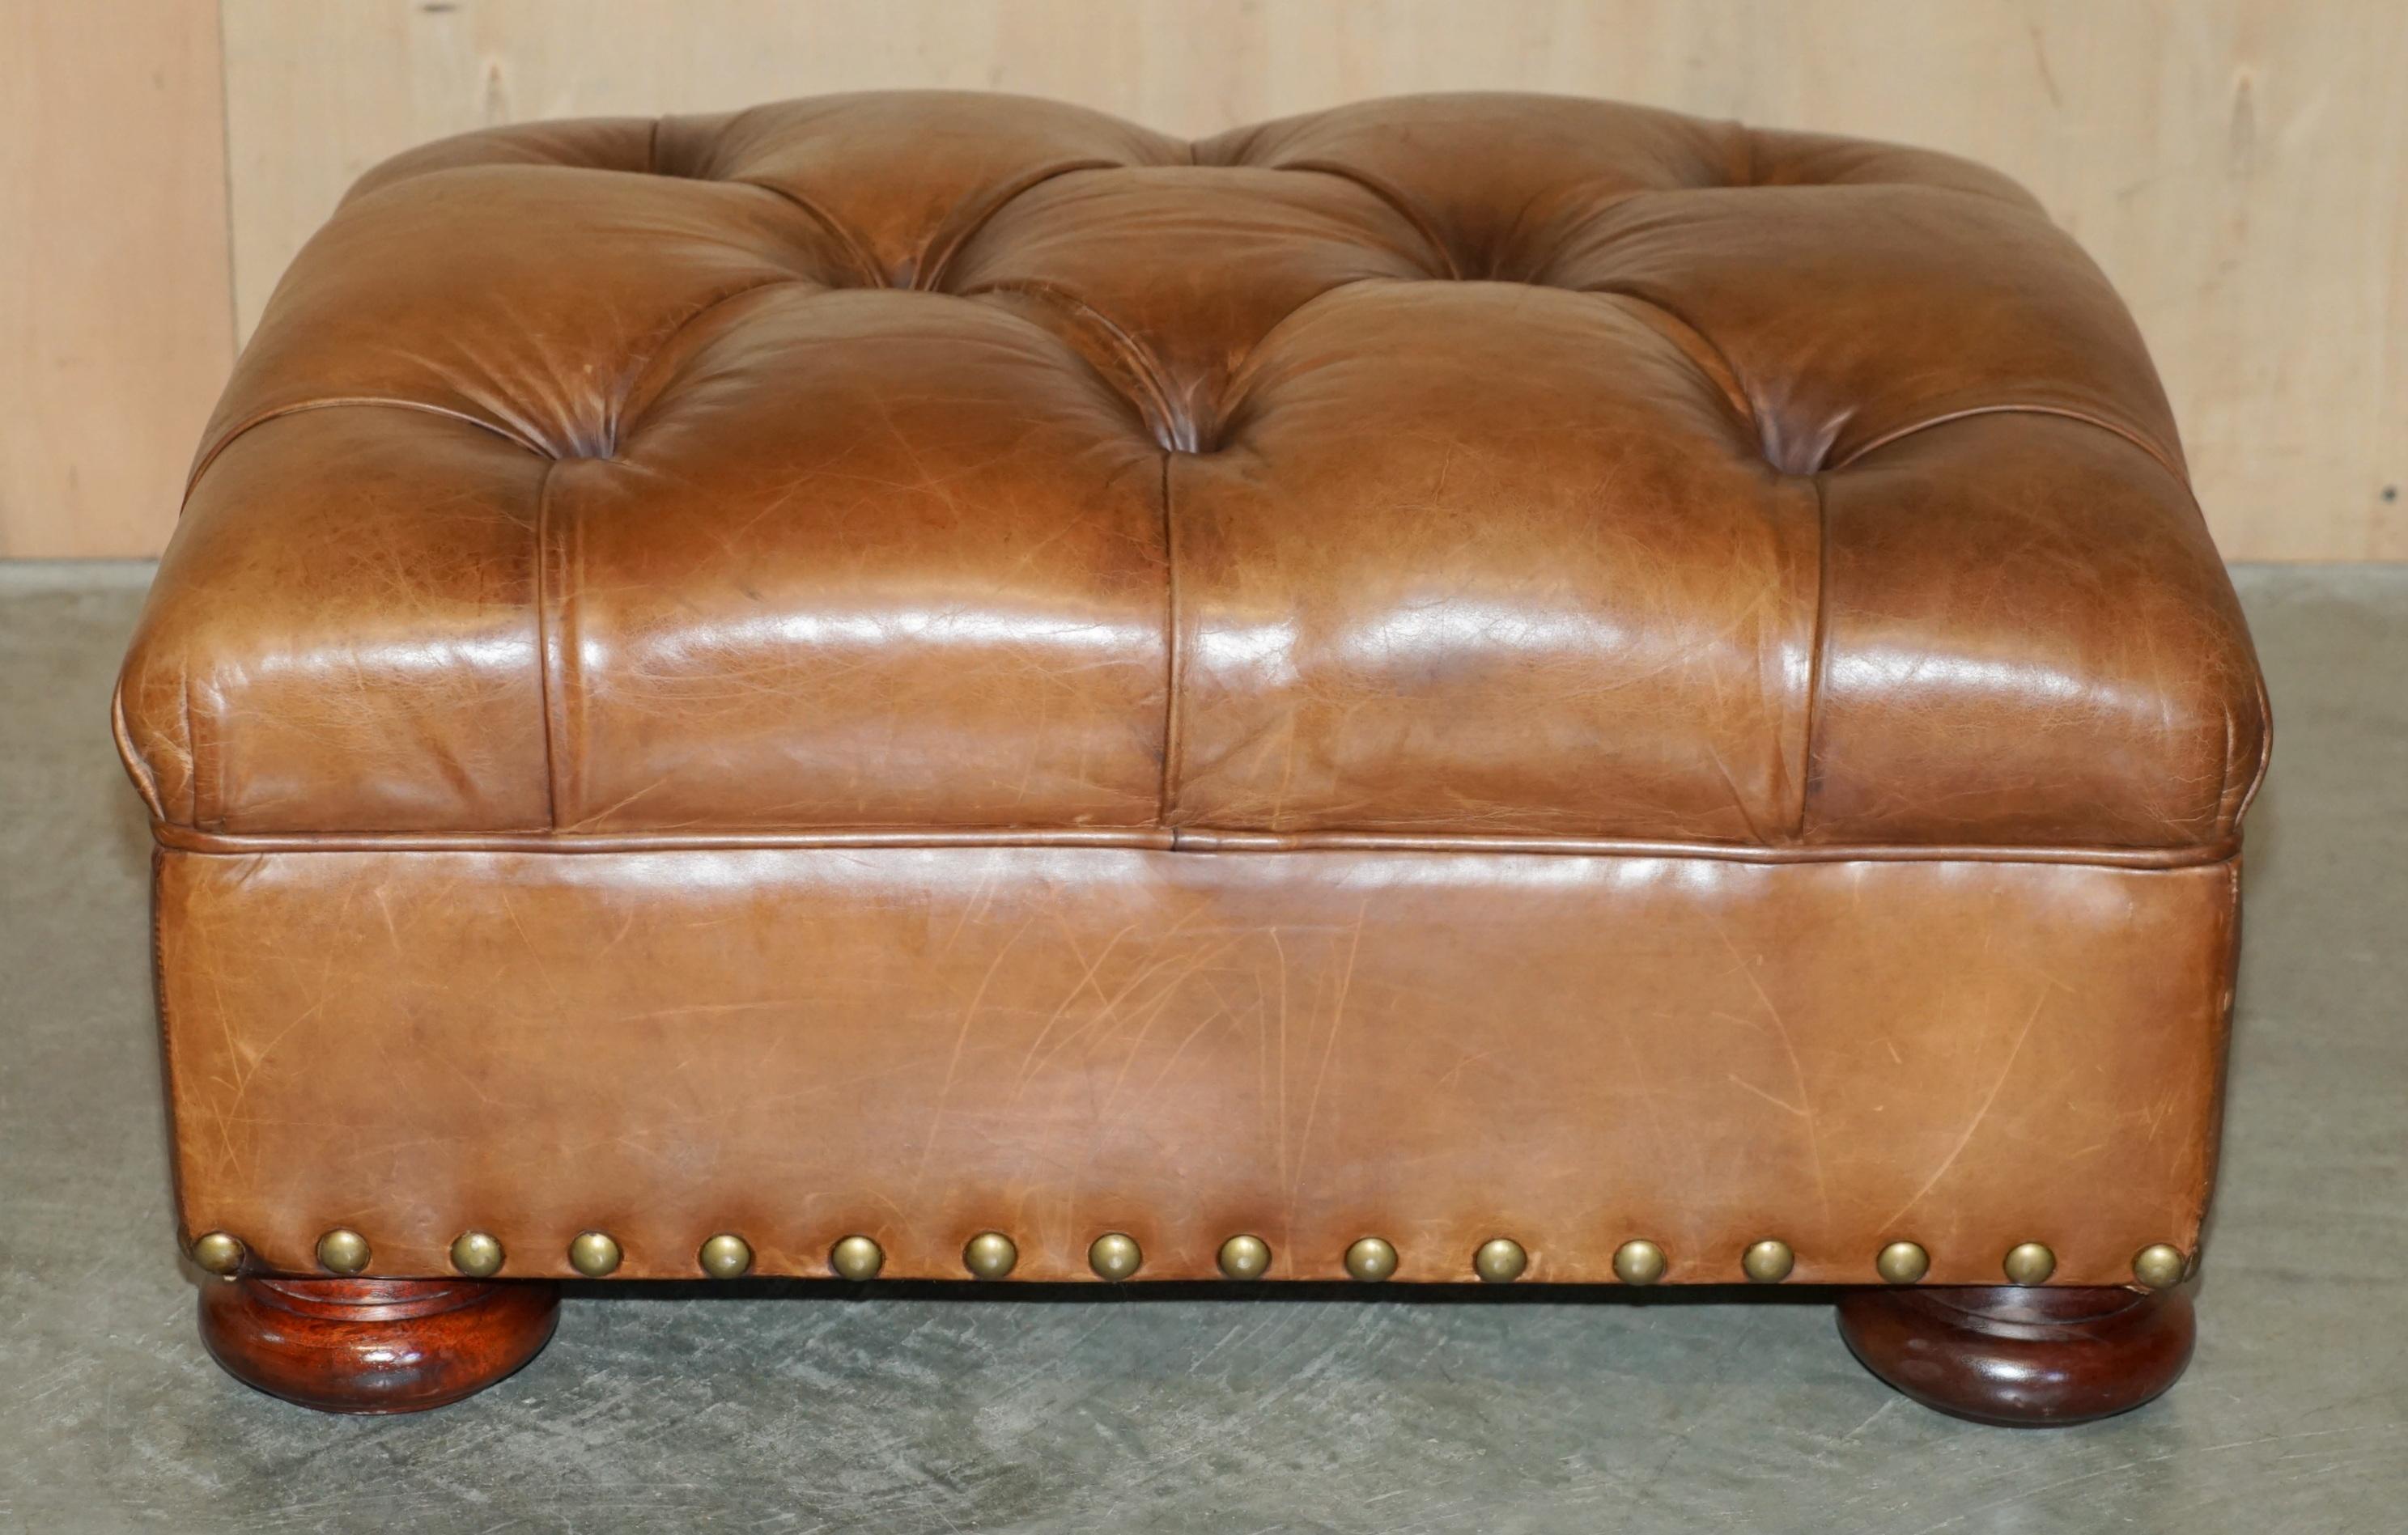 leather footstool ottoman